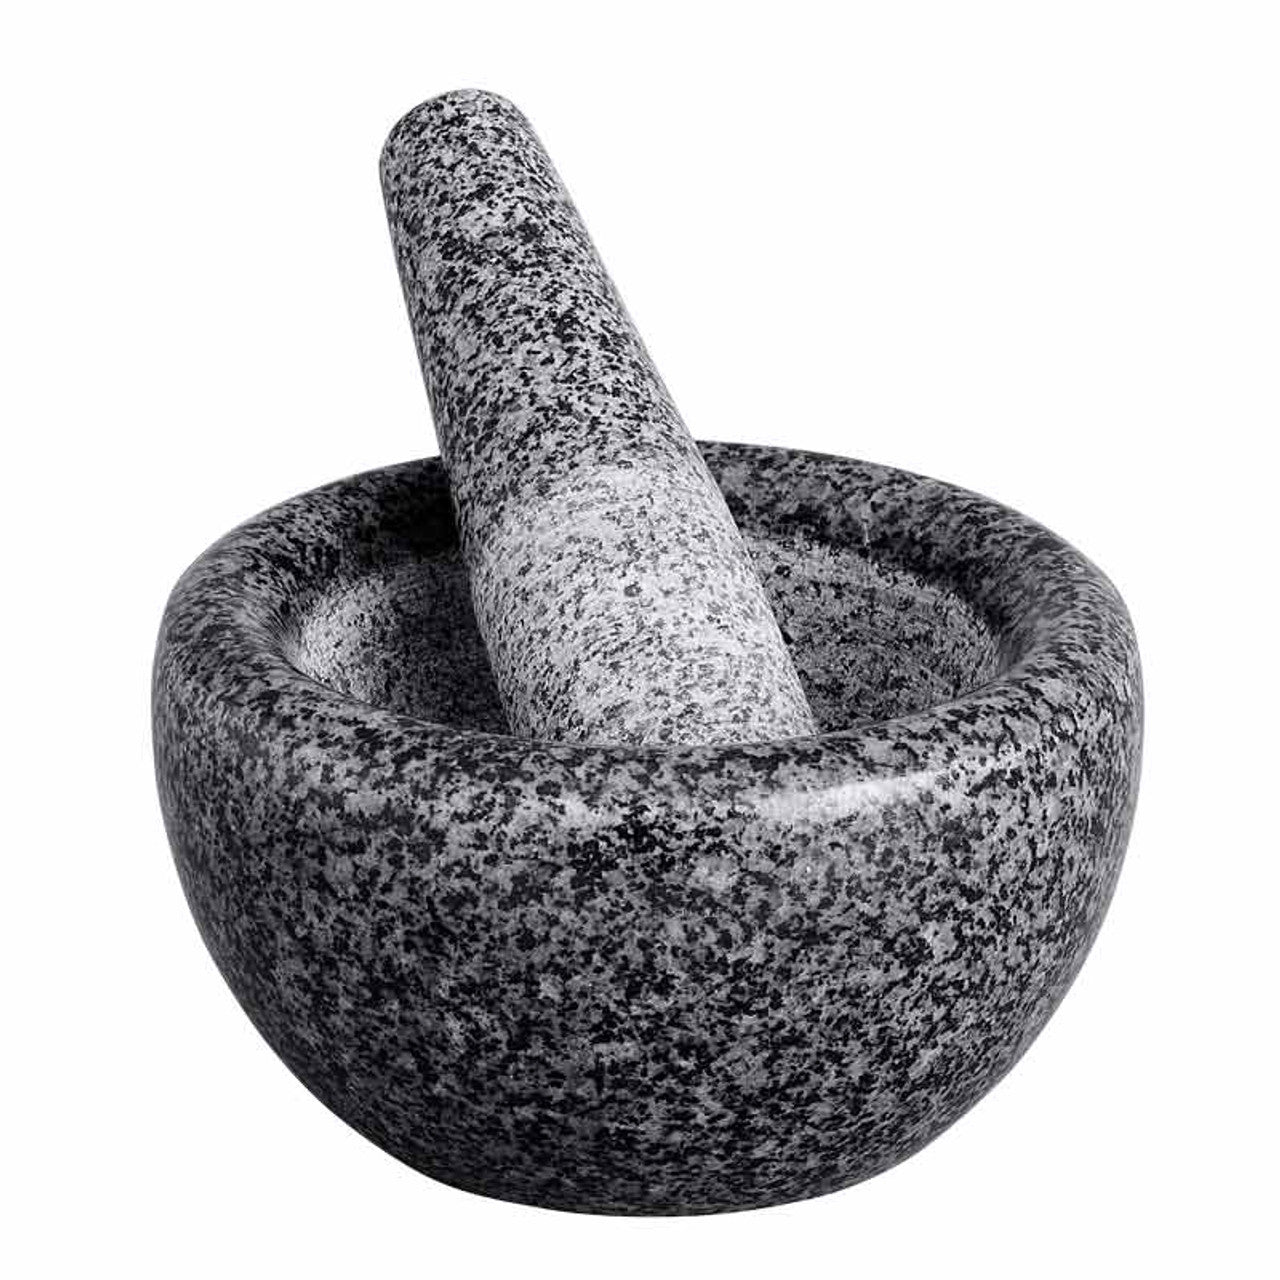 Mortar and Pestle- Pencil Edge Mortar-Black Speckled 18cm